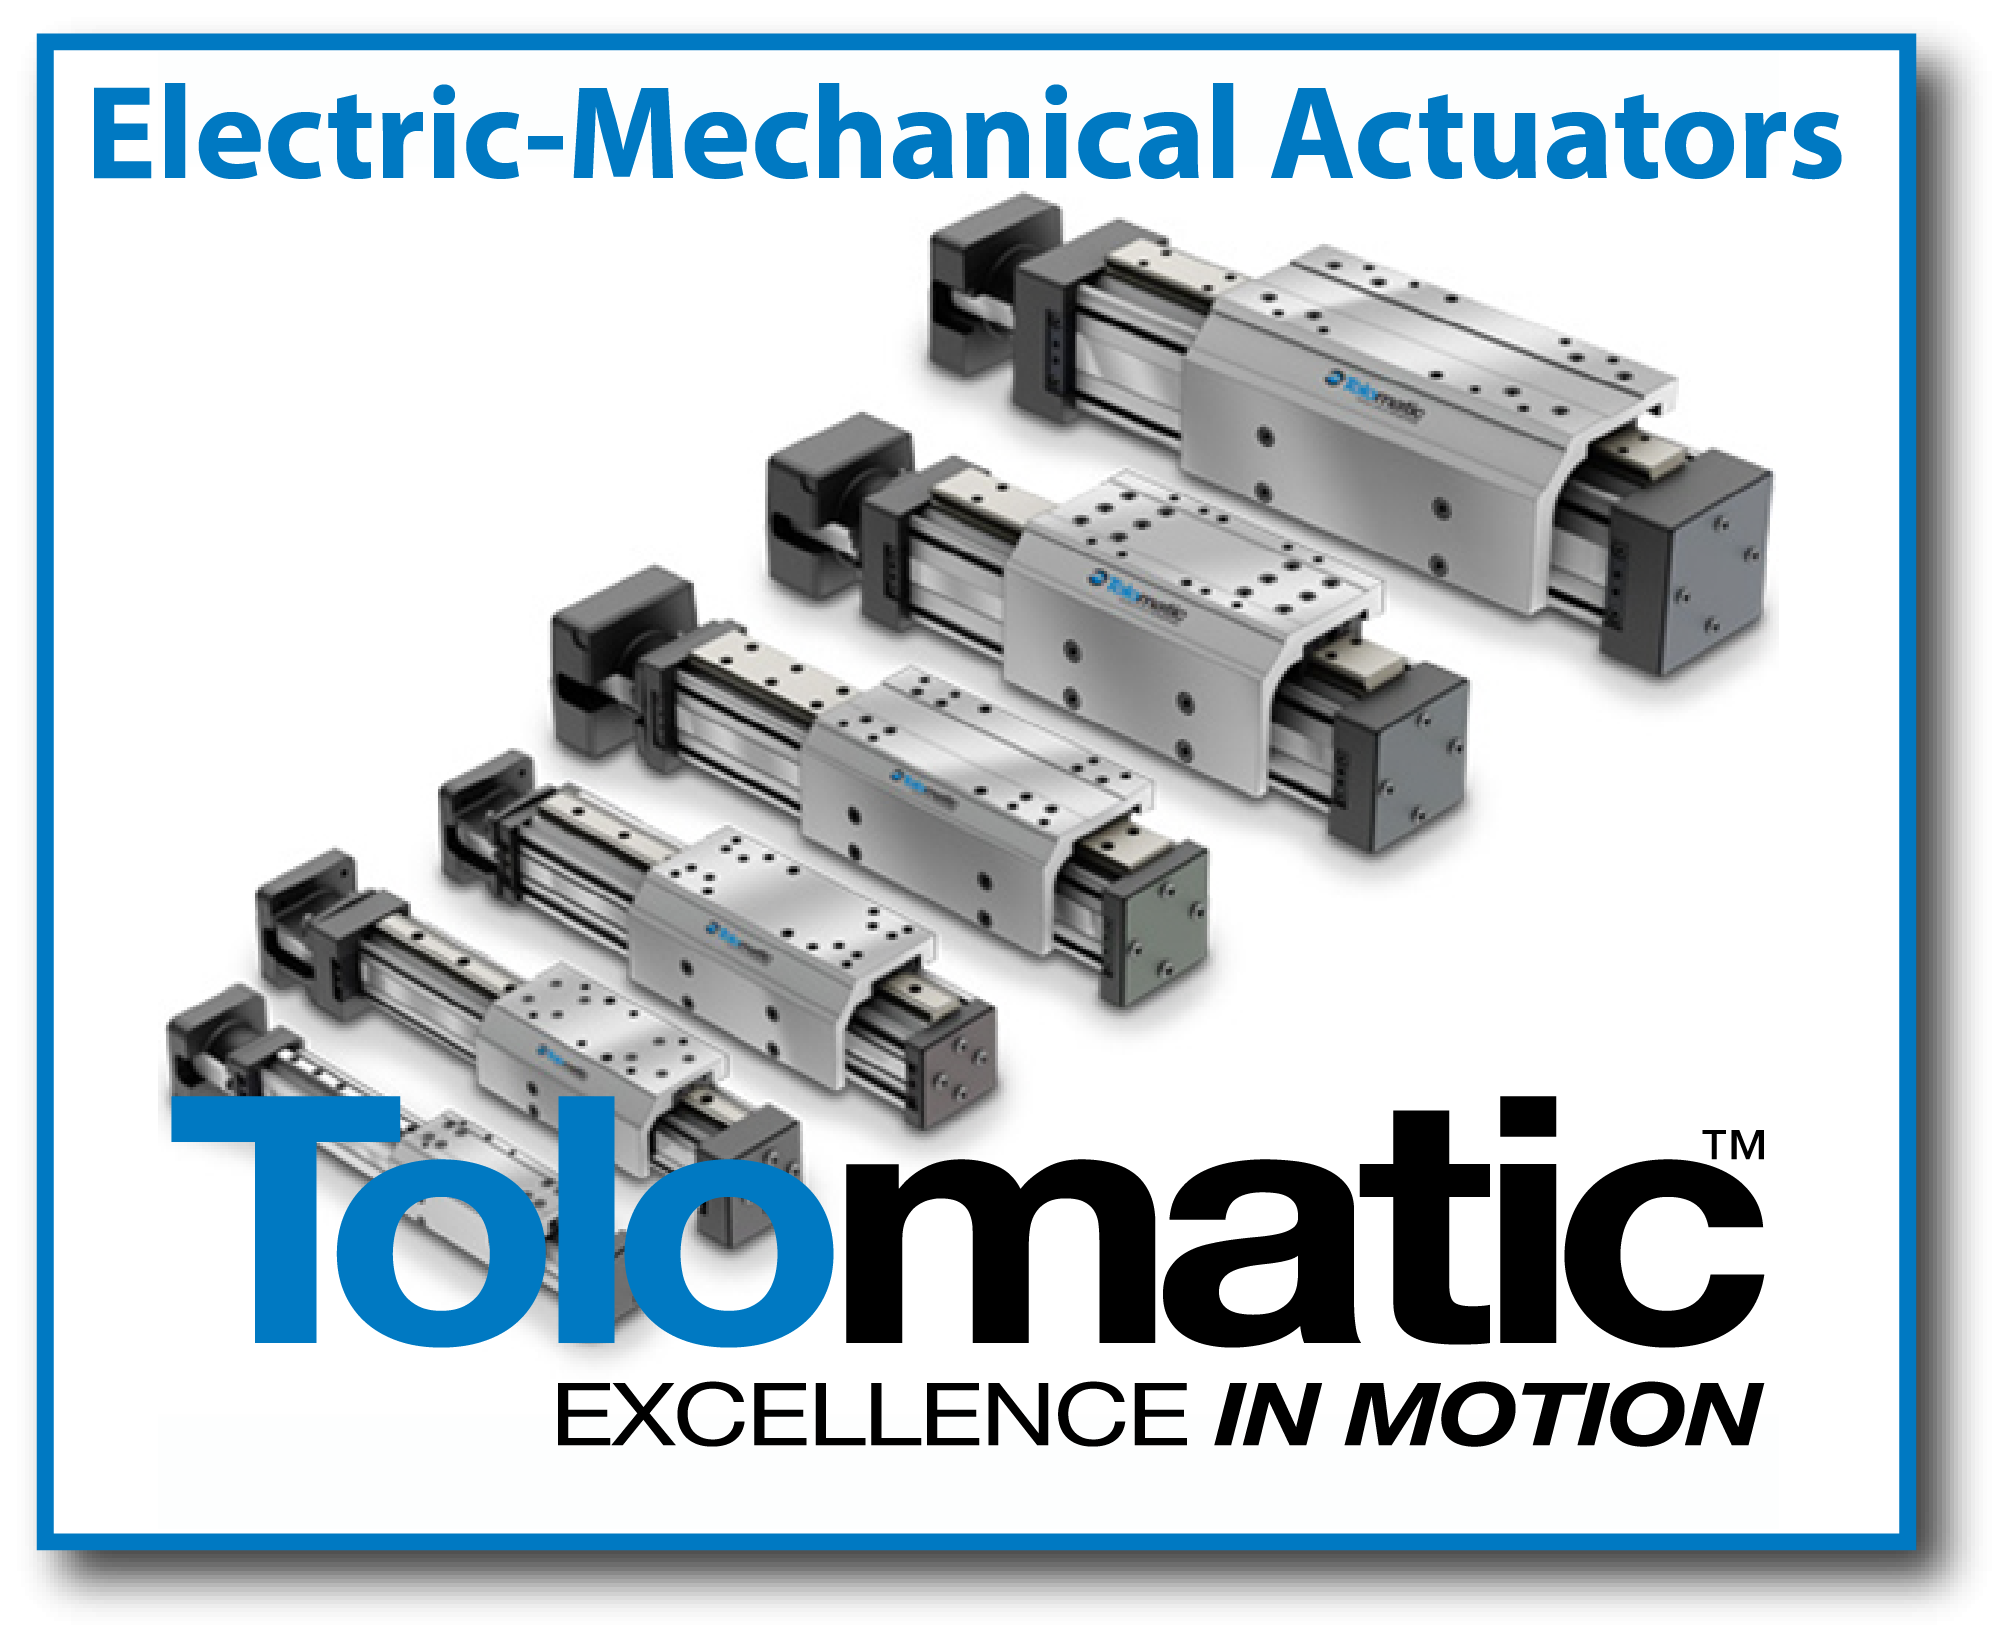 Tolomatic Actuators - Electro-Mechanical Actuators